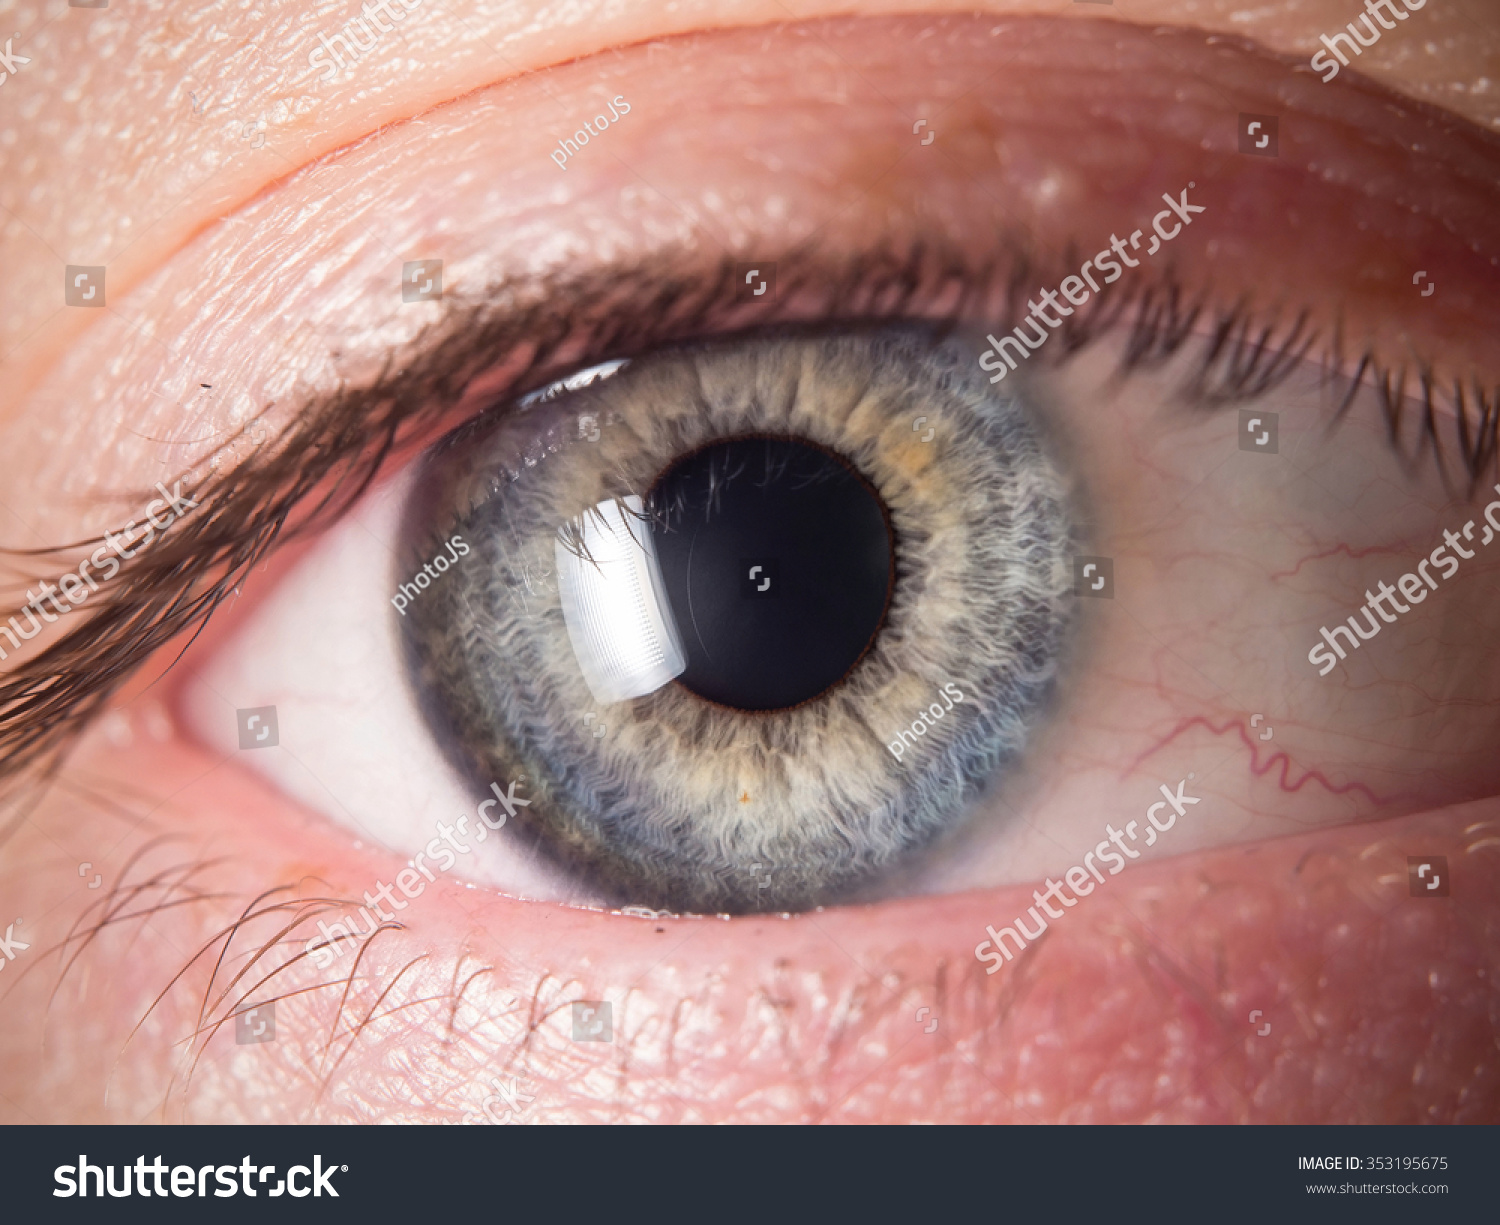 Human eye detail #353195675